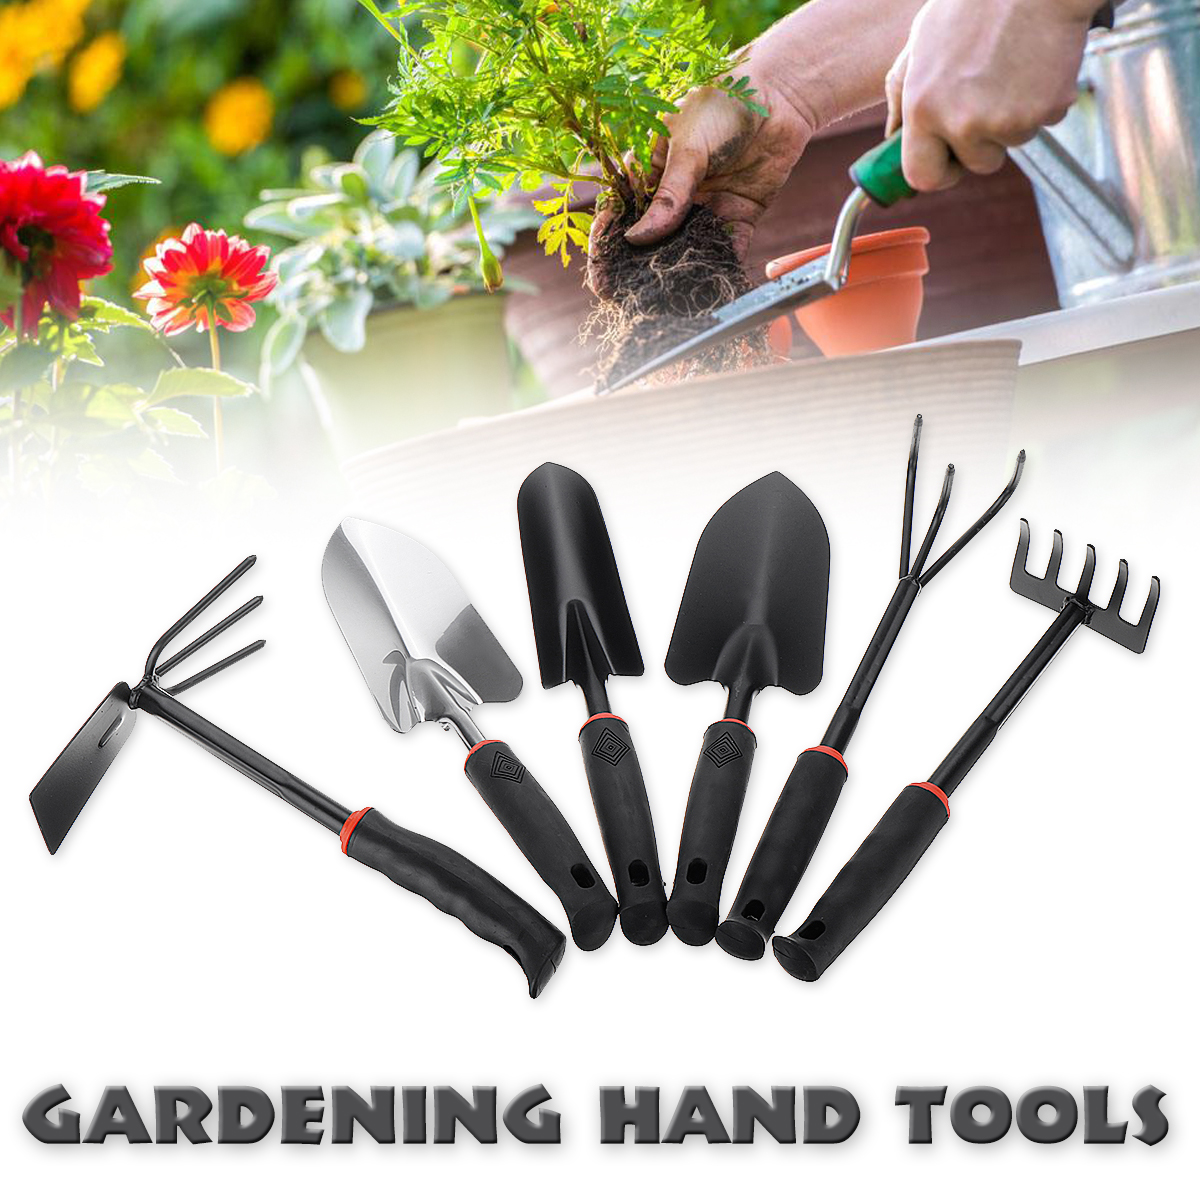 Gardening-Hand-Tools-Trowel-Shovel-Rake-Fork-Hoe-Garden-Cultivator-Transplant-Weeding-kit-1567957-1